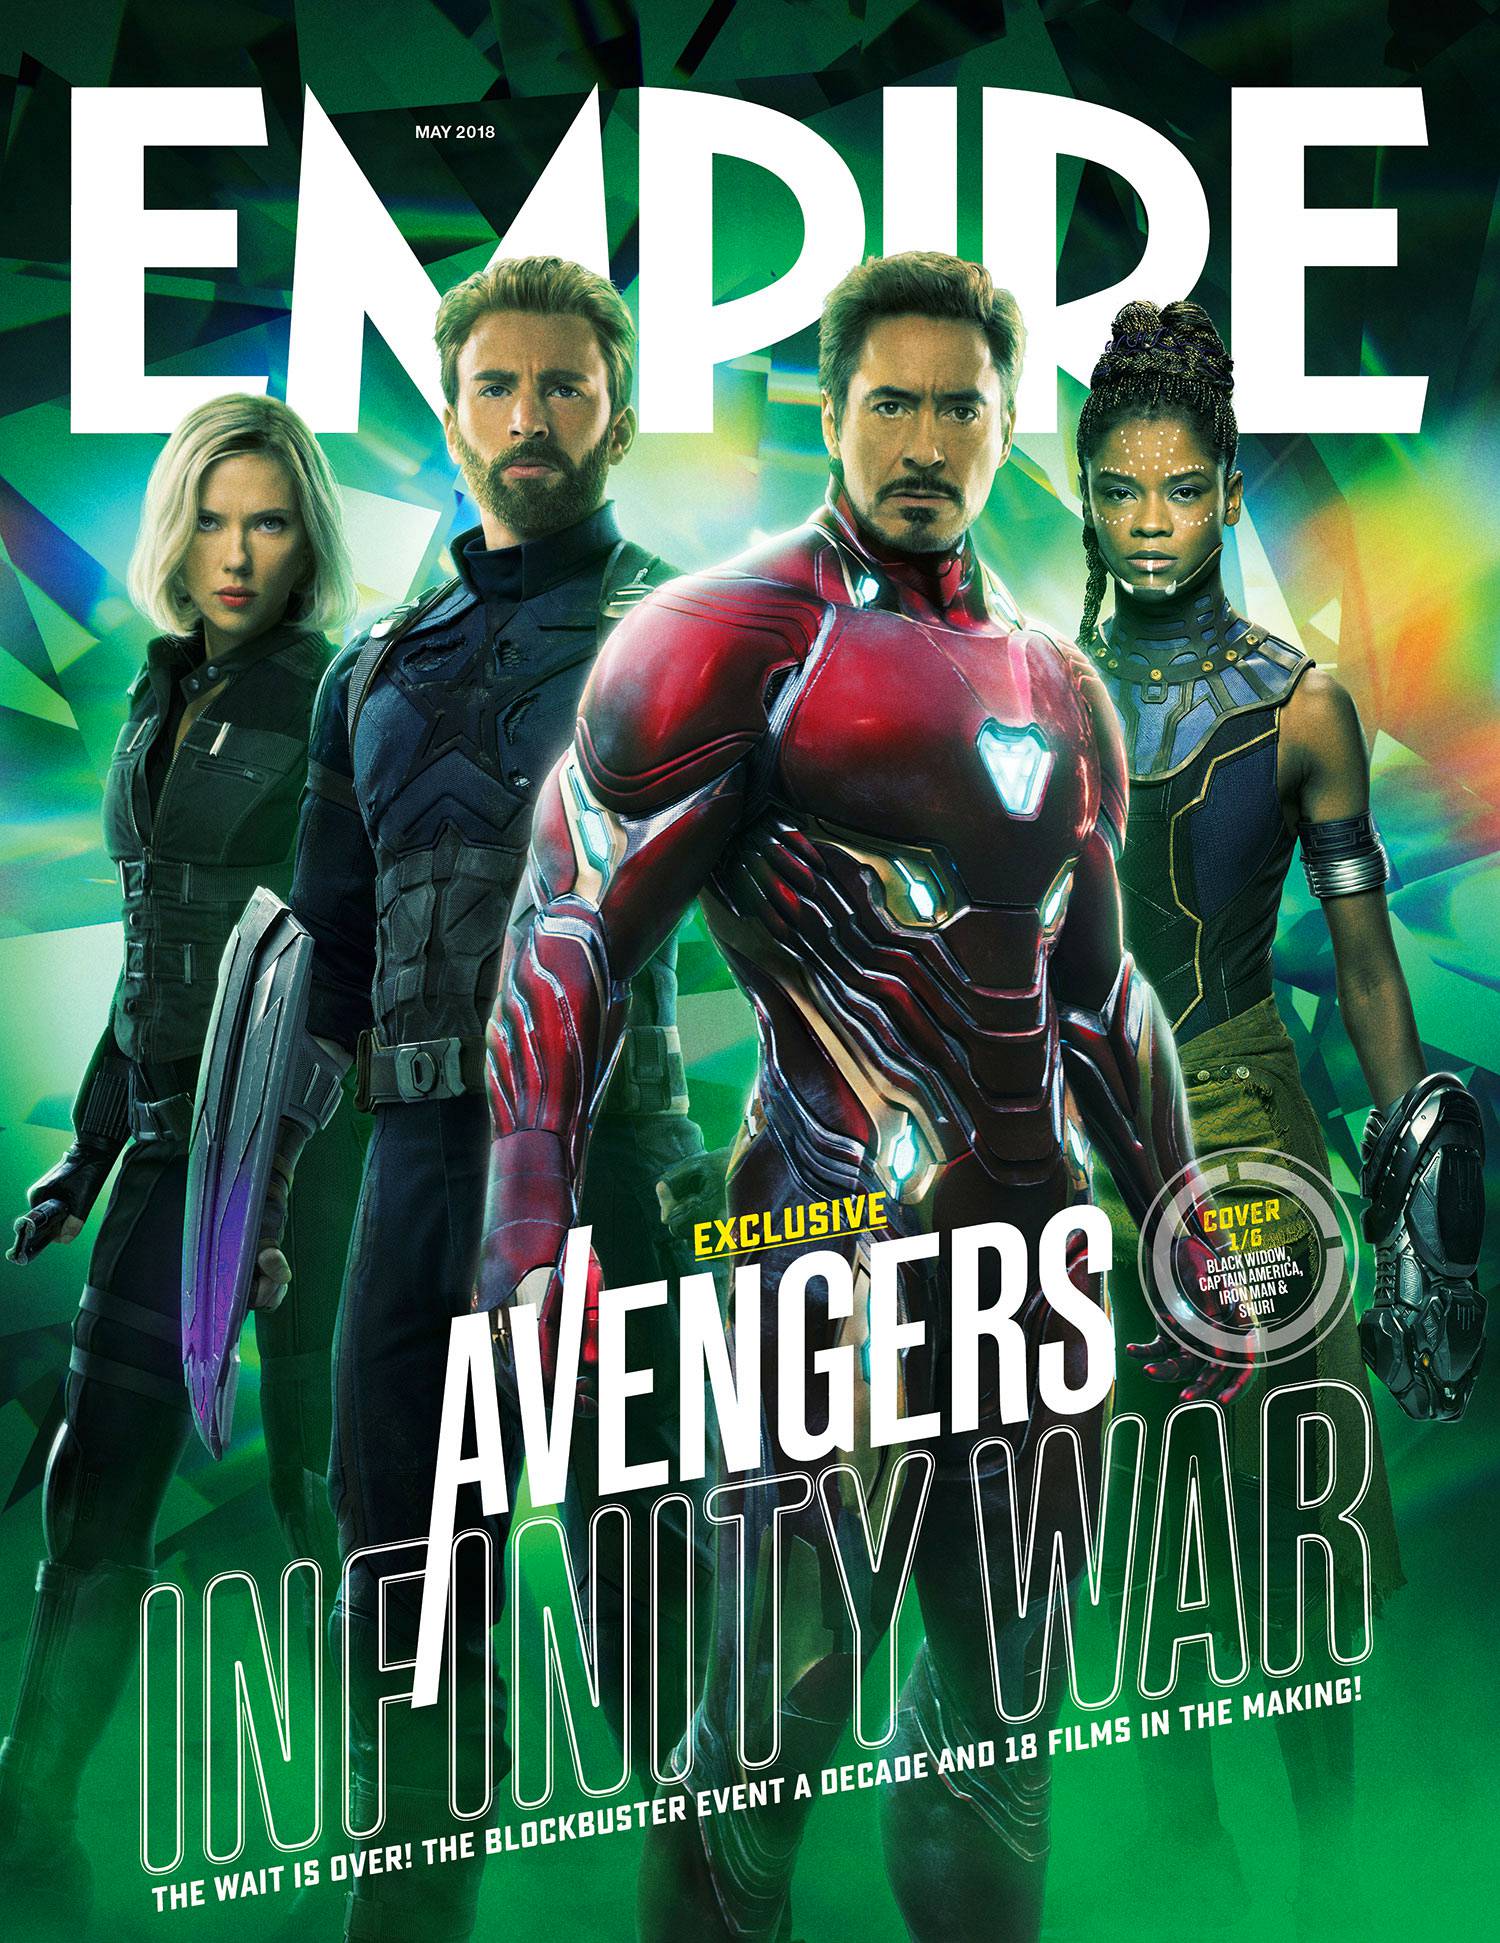 Empire Magazine Avengers: Infinity War